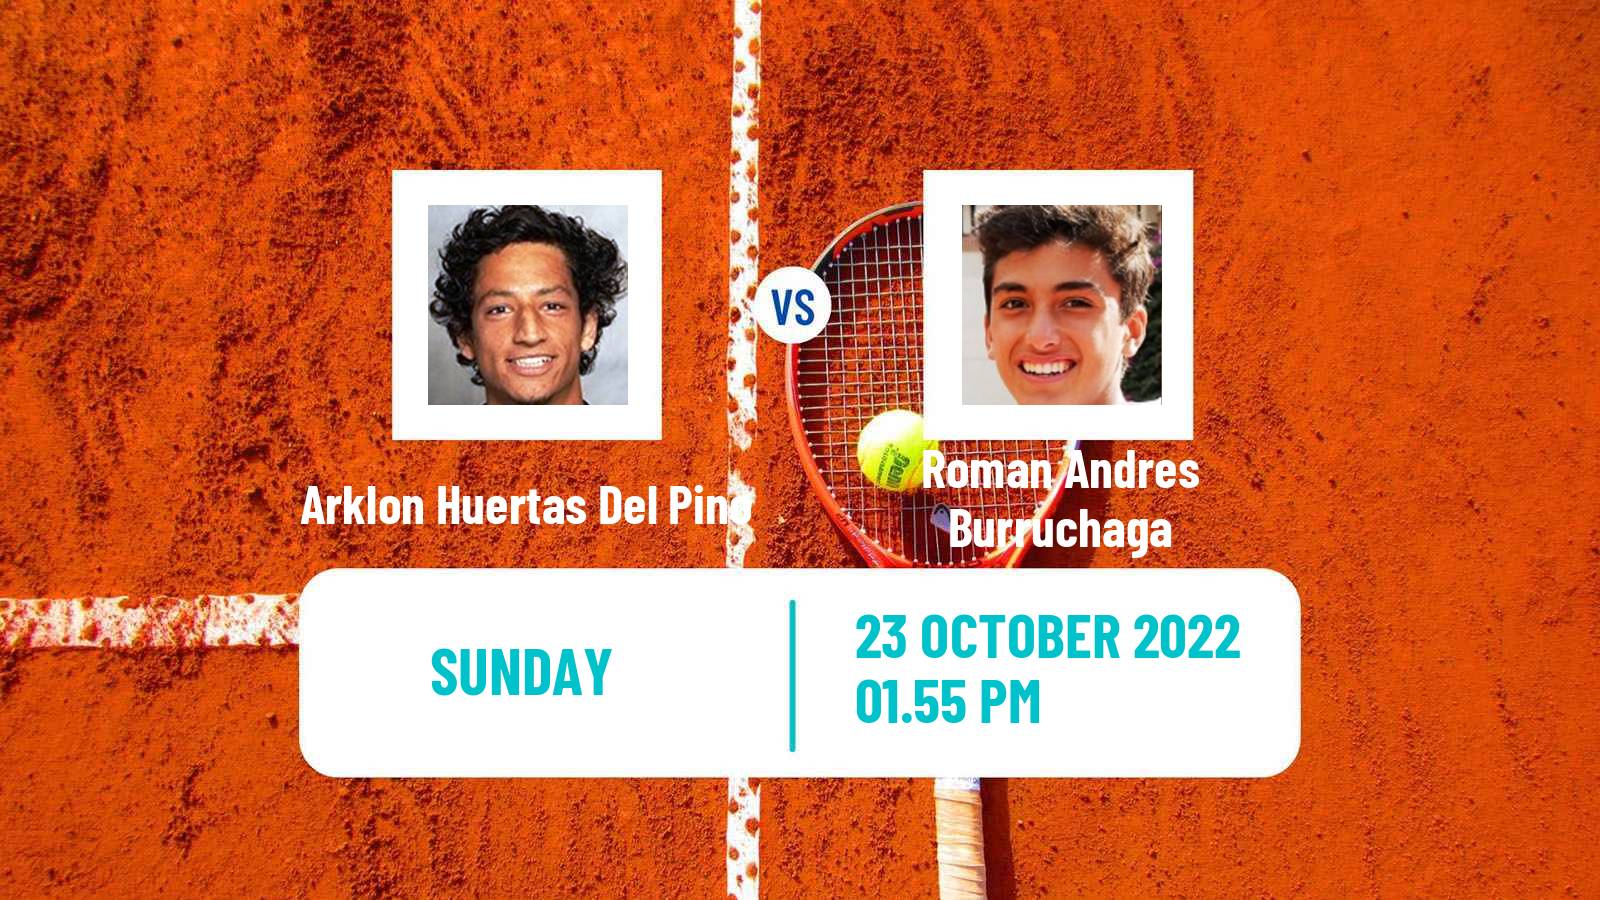 Tennis ATP Challenger Arklon Huertas Del Pino - Roman Andres Burruchaga